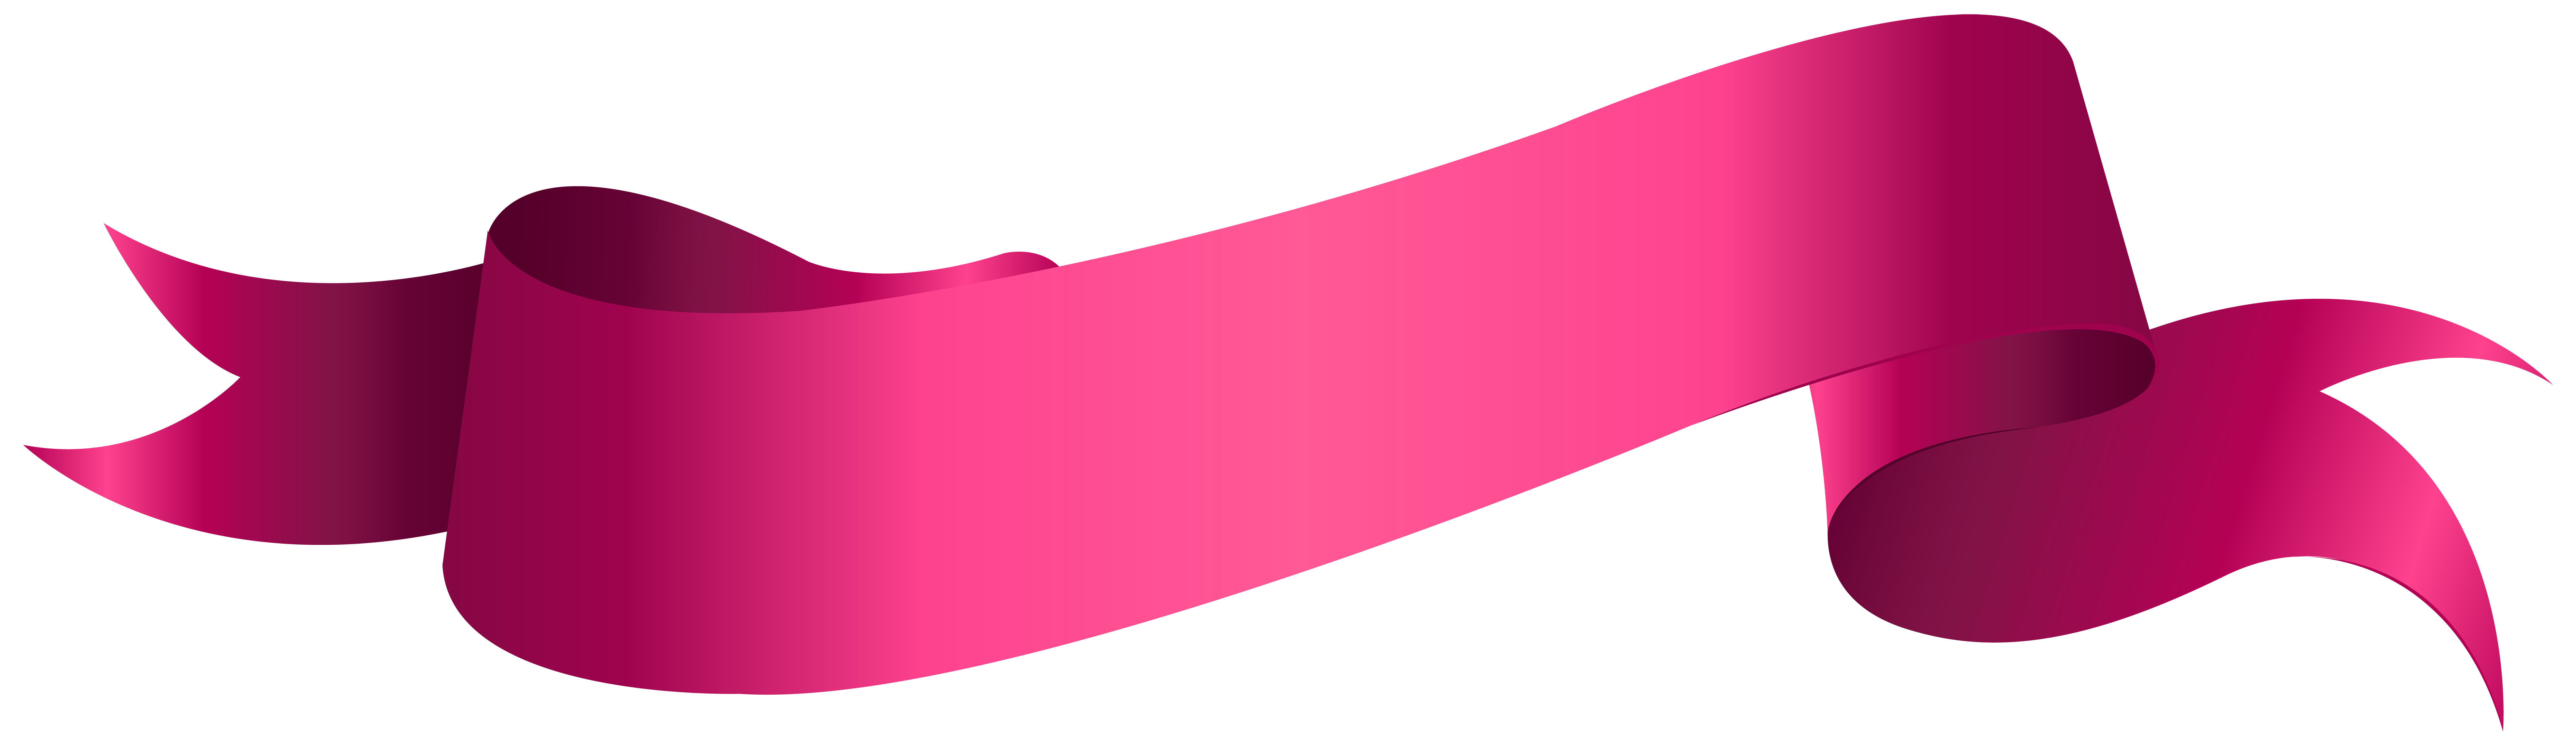 Banner Pink PNG Clip Art Transparent Image | Gallery Yopriceville